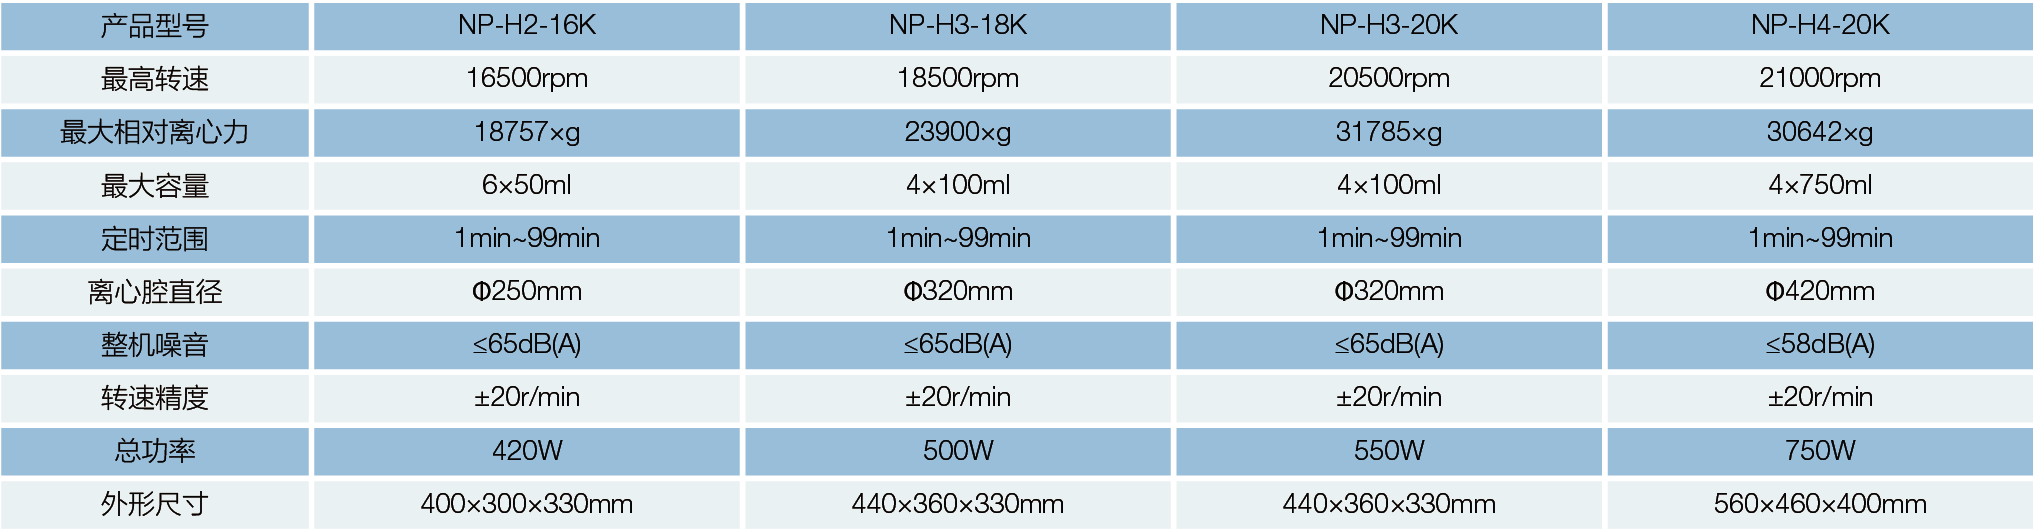 NP-H4-20K 台式高速离心机(图1)